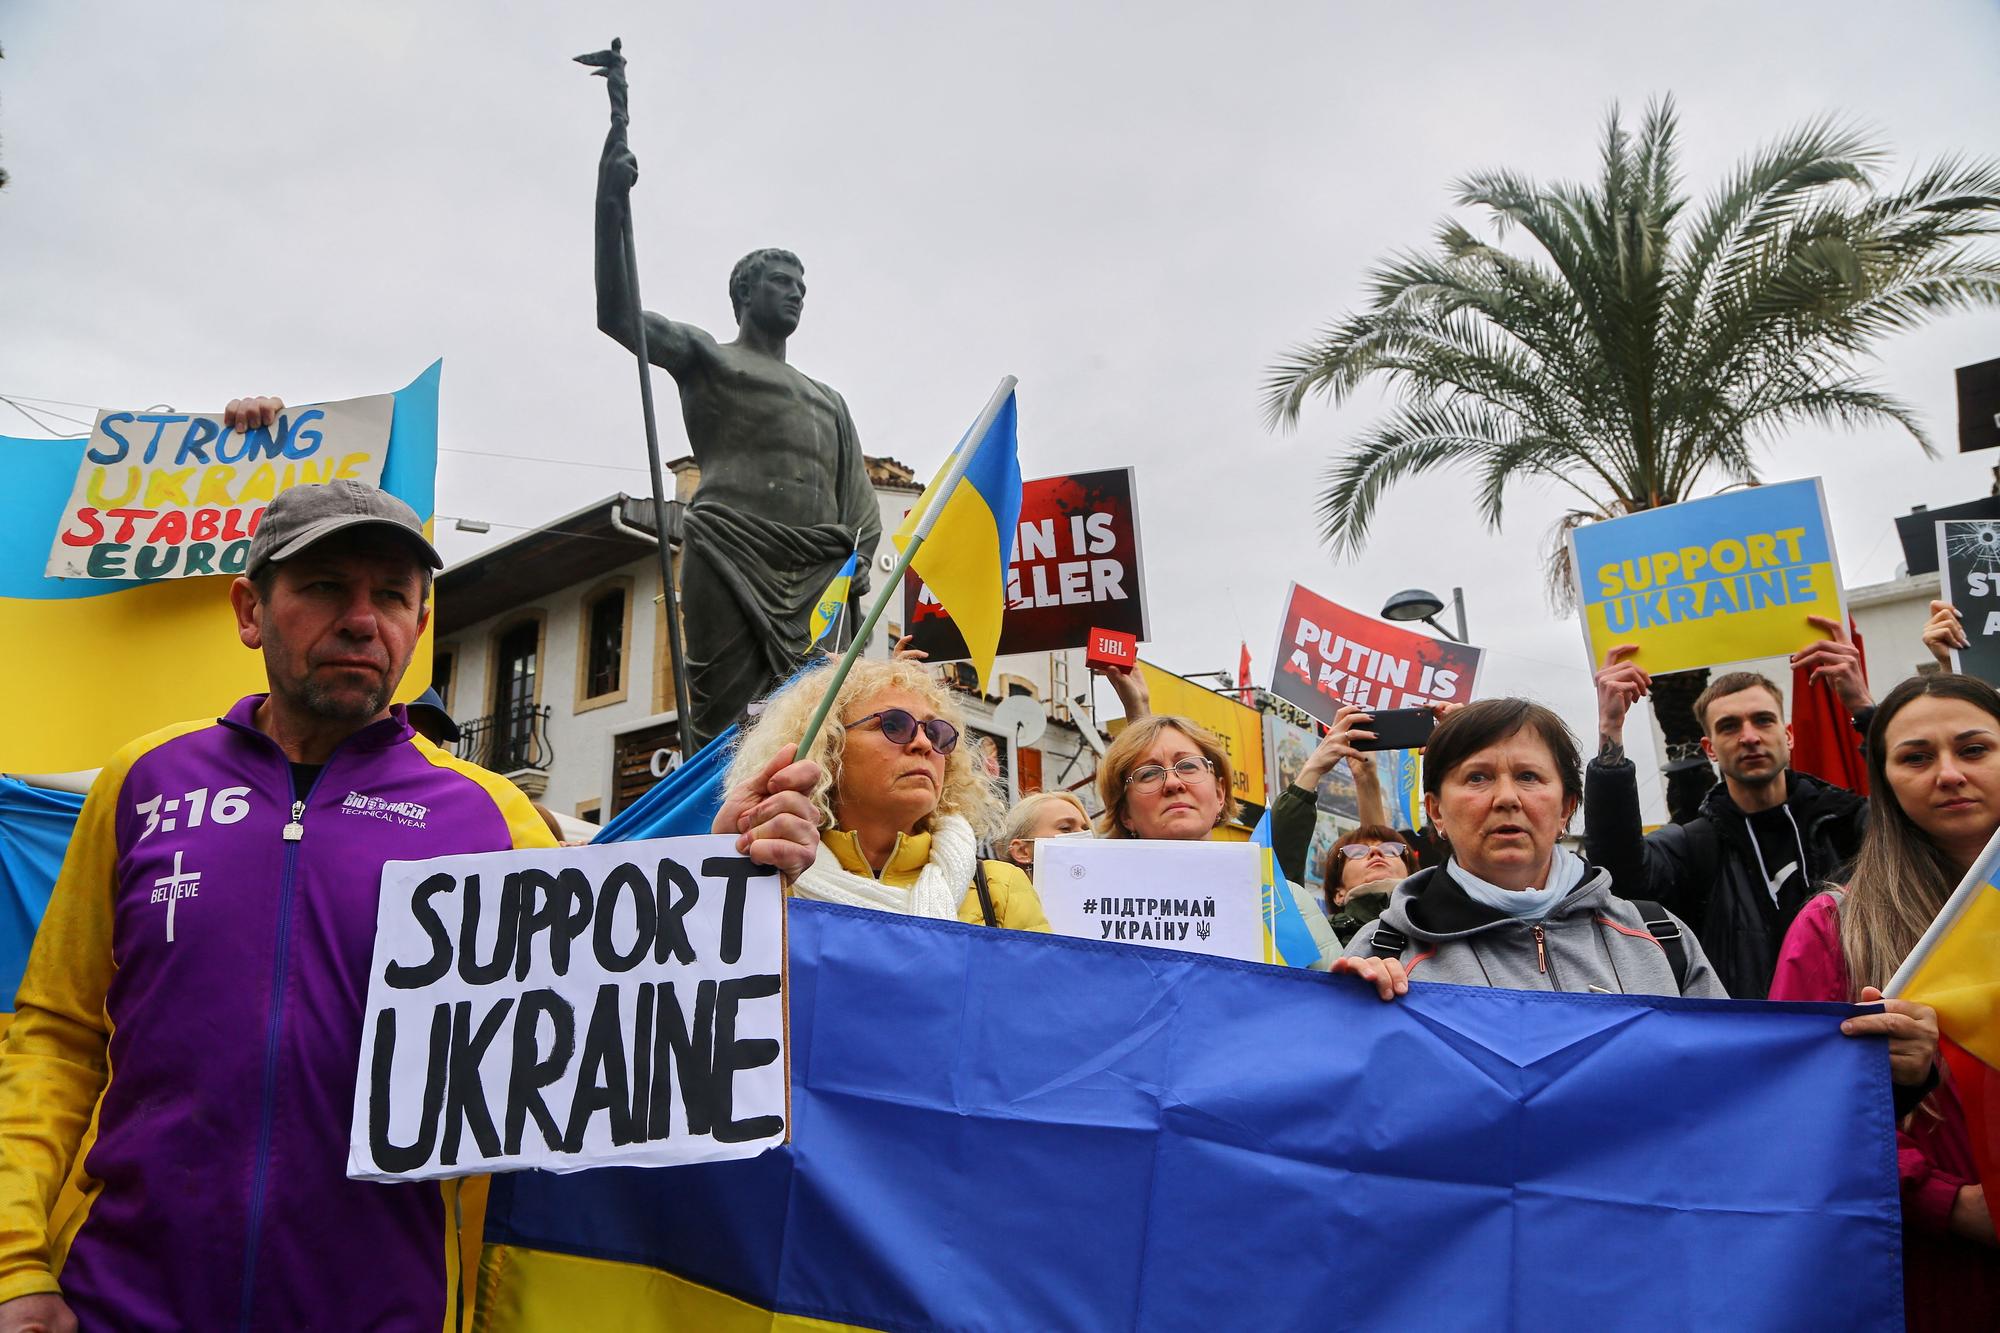 Protest in support of Ukraine, in Antalya